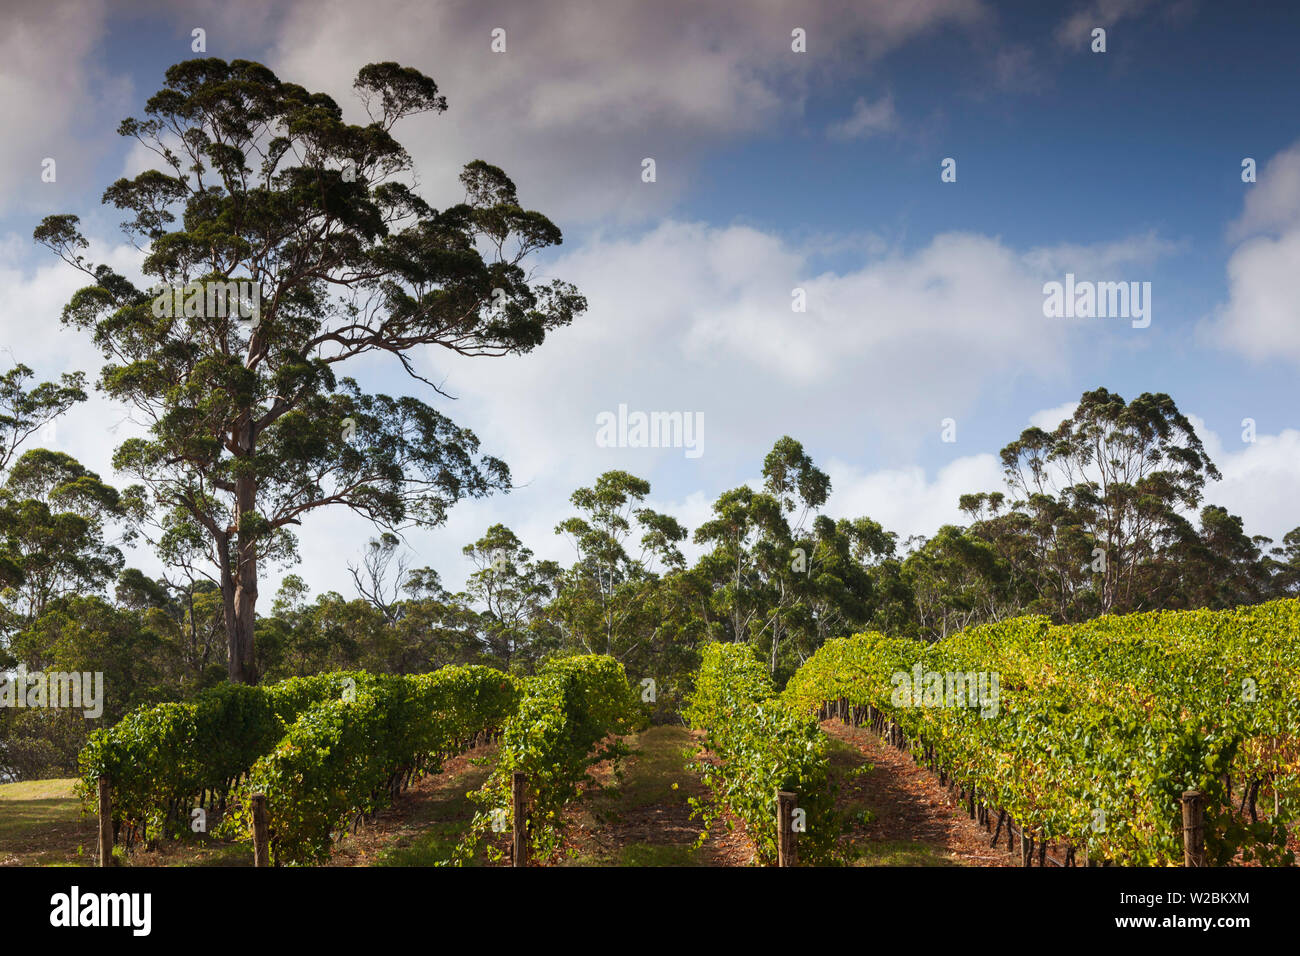 Australia, Western Australia, The Southwest, Denmark, Forrest Hill Winery vineyard Stock Photo